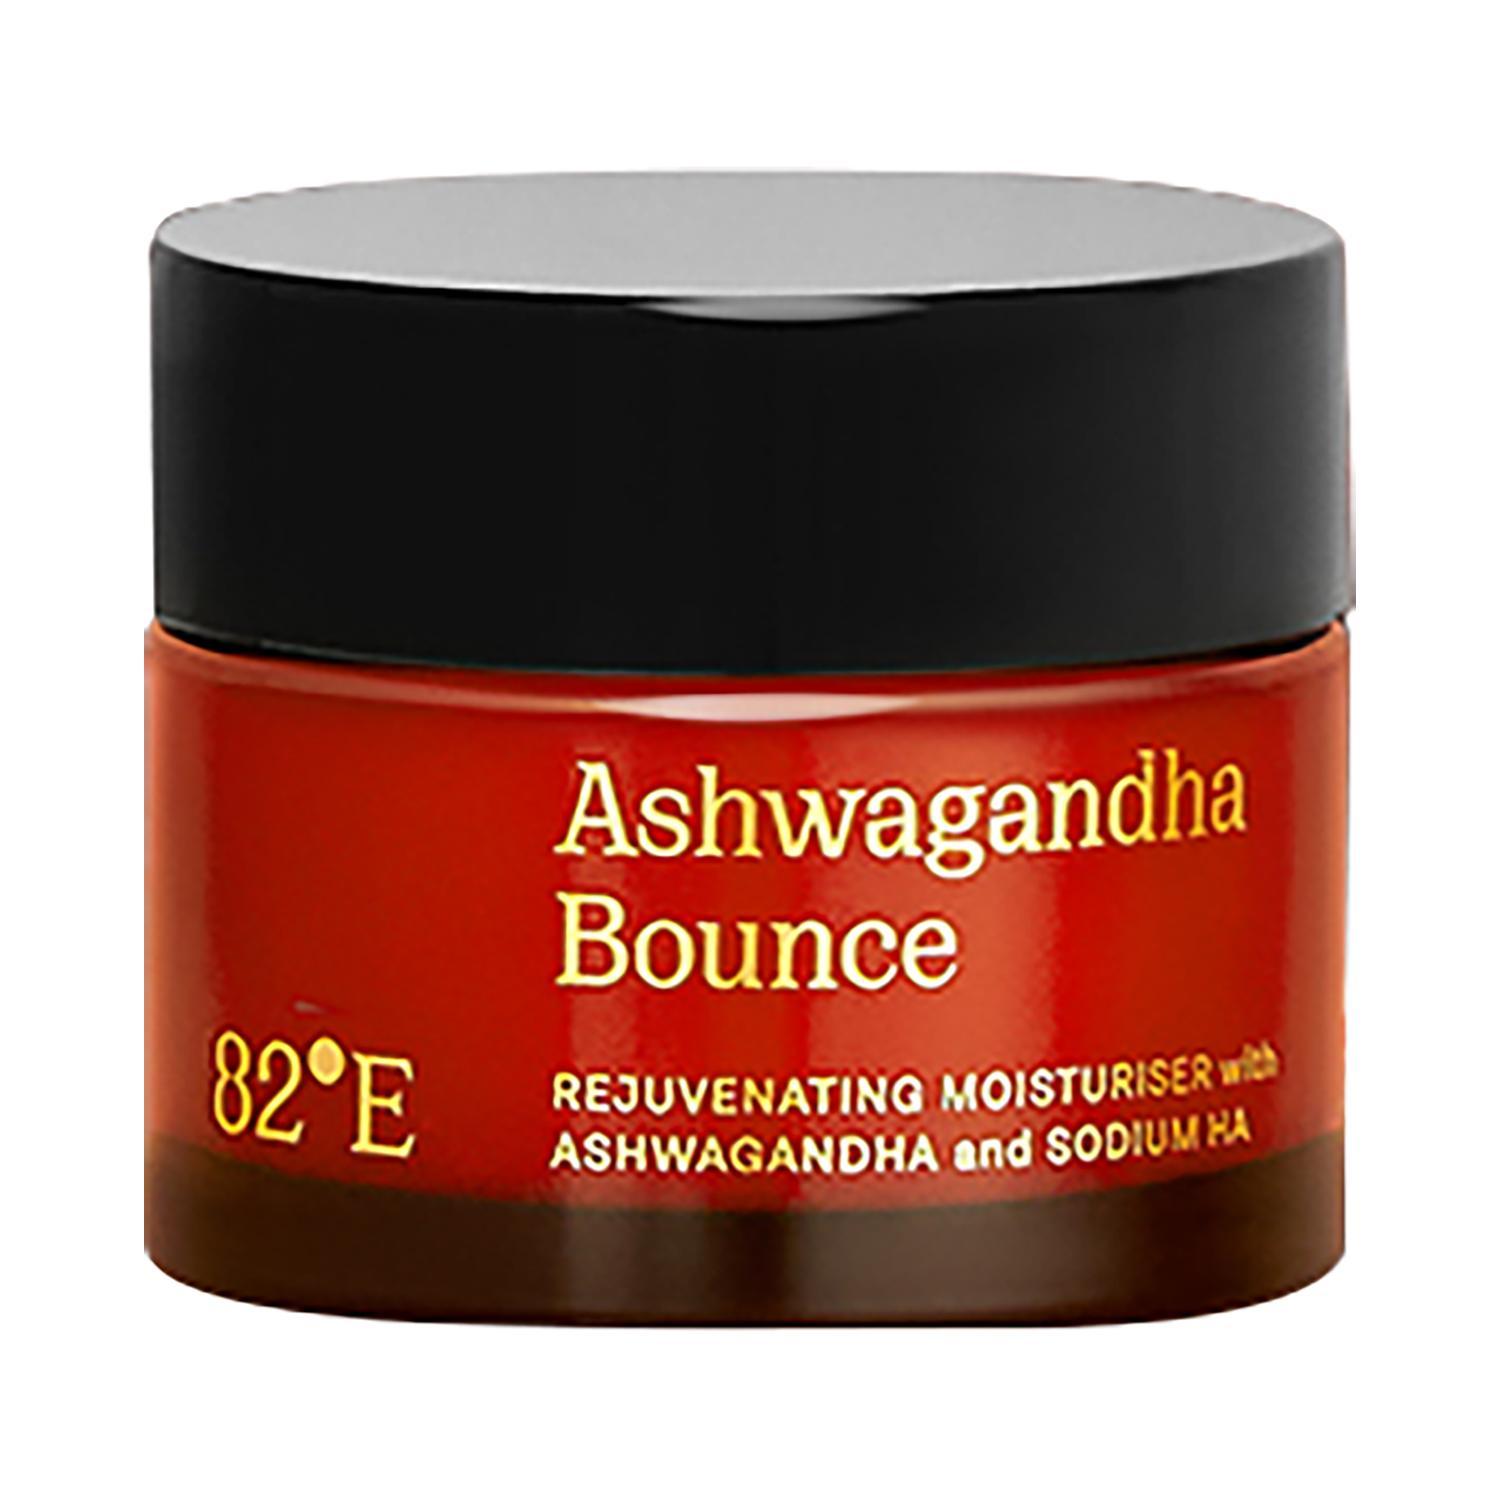 82°e ashwagandha bounce face moisturizer (15 ml)